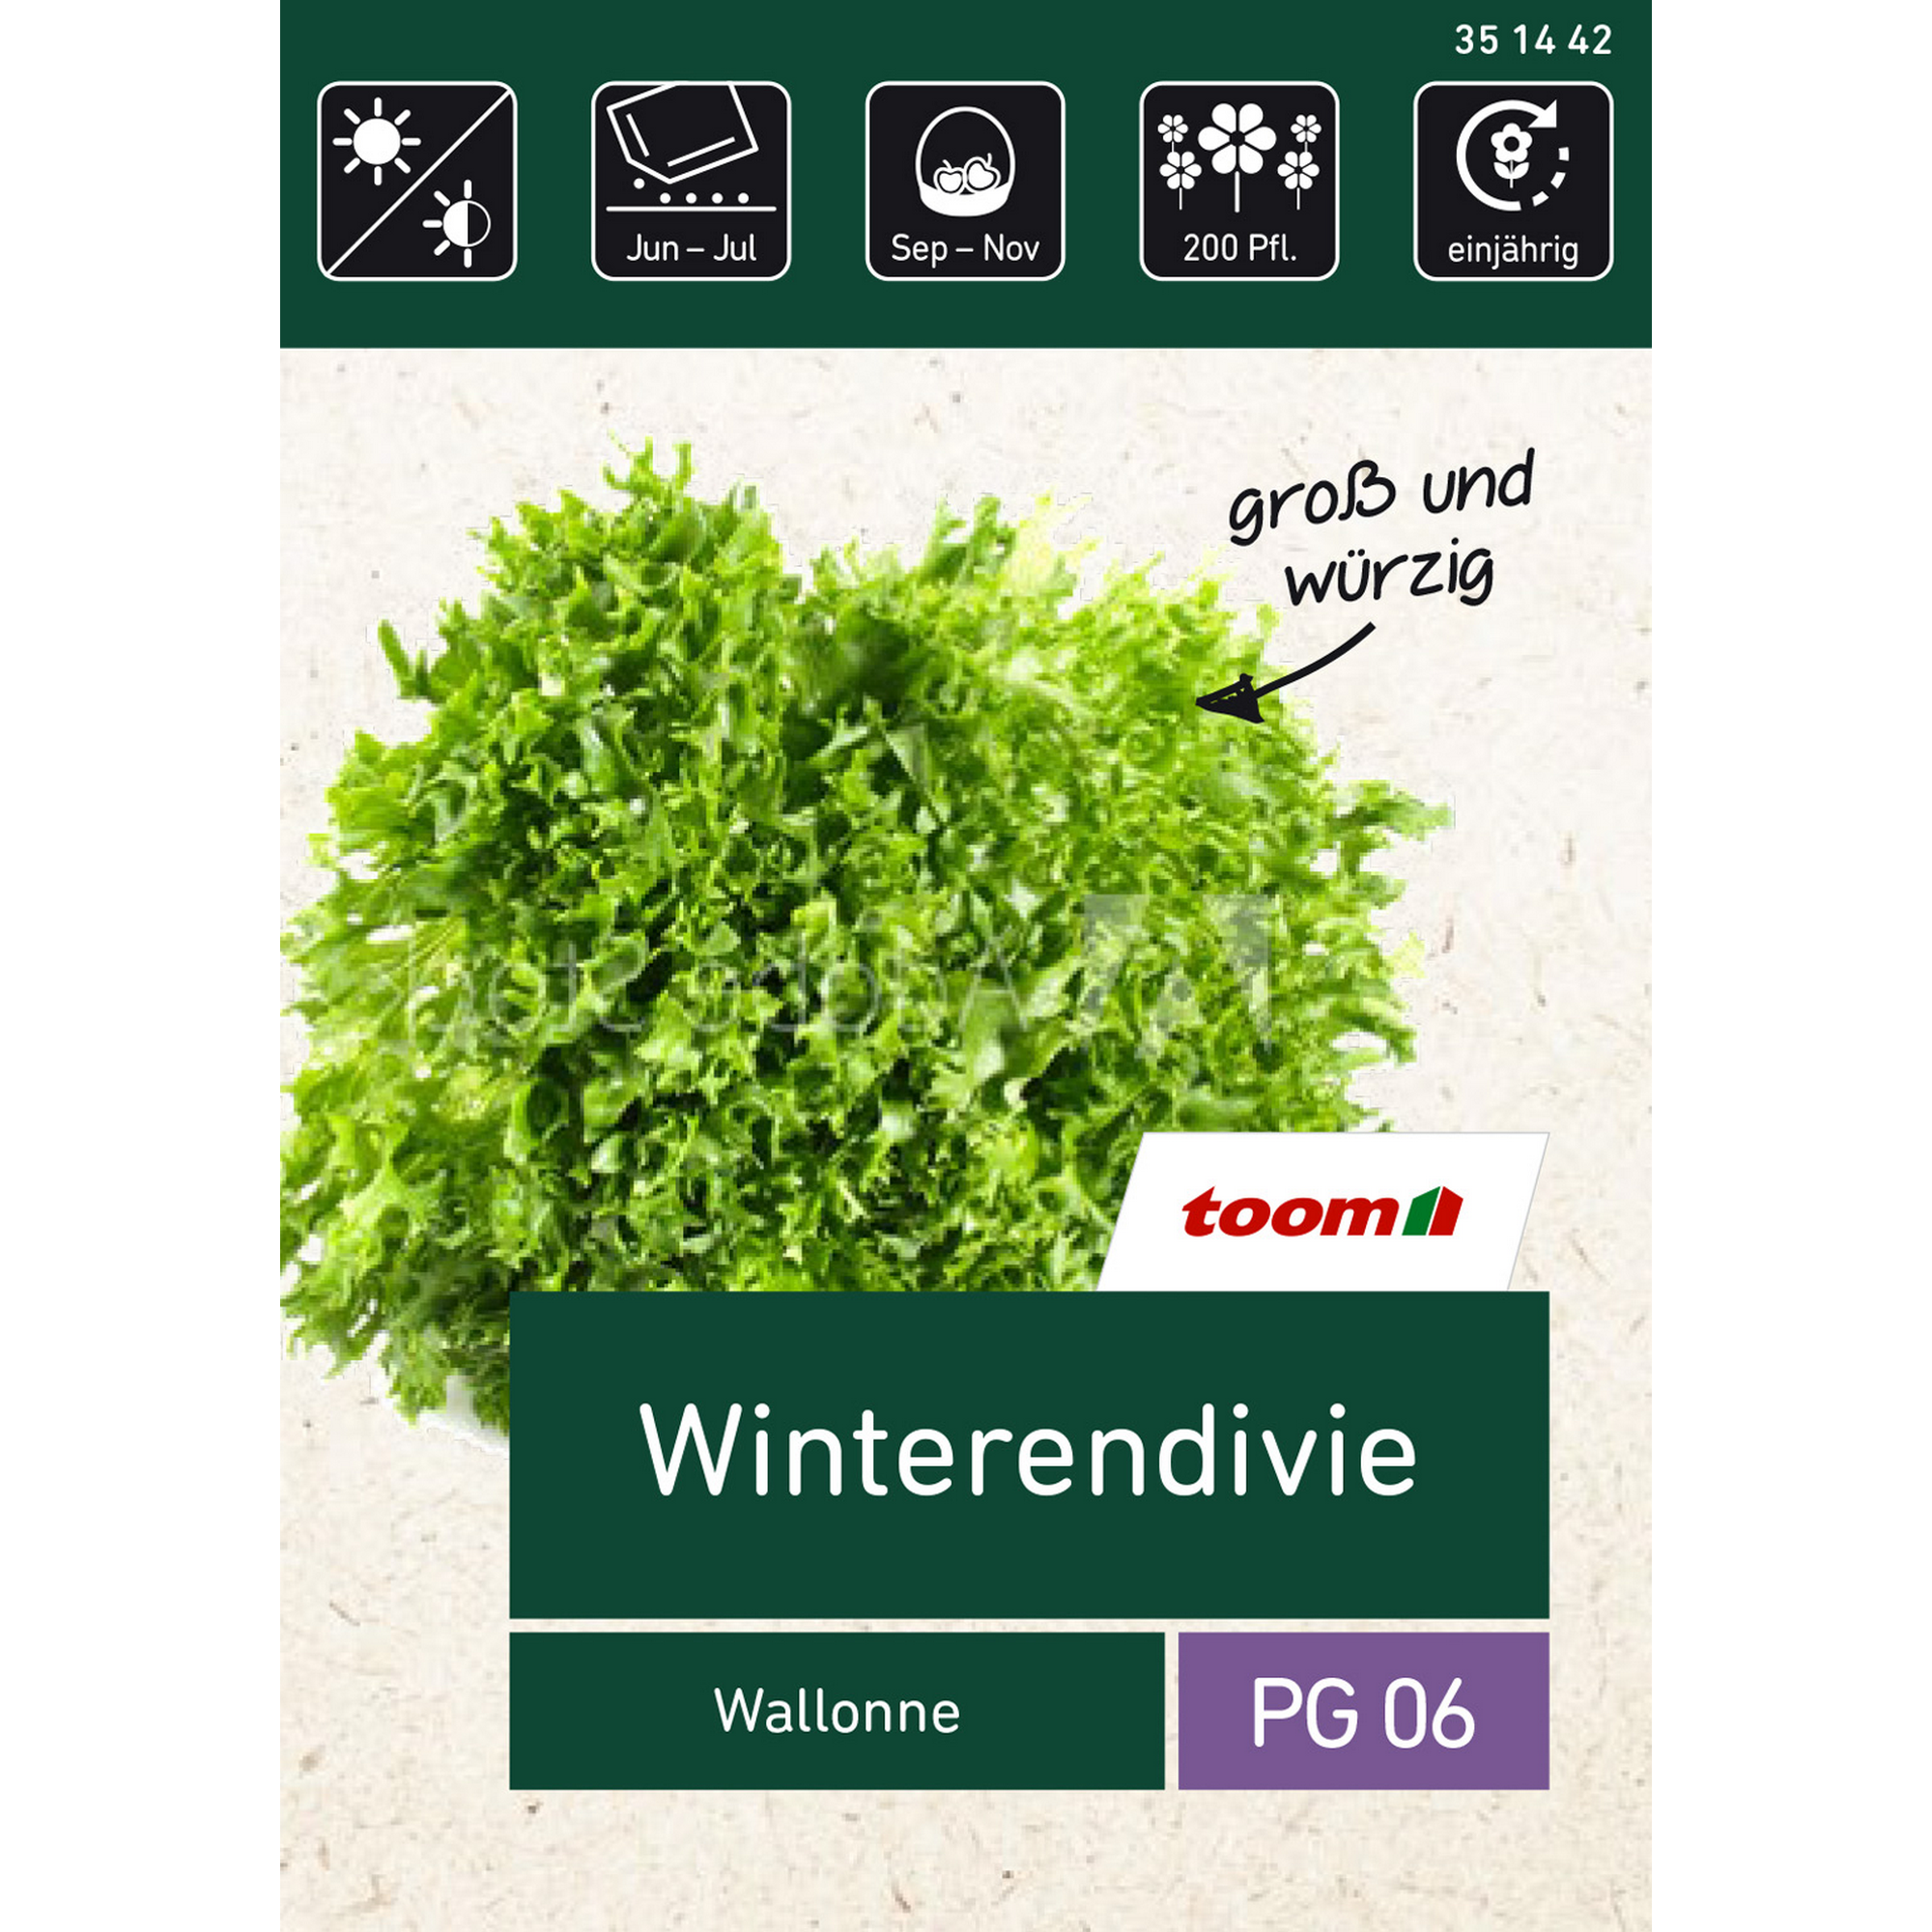 Winterendivie Wallonne + product picture